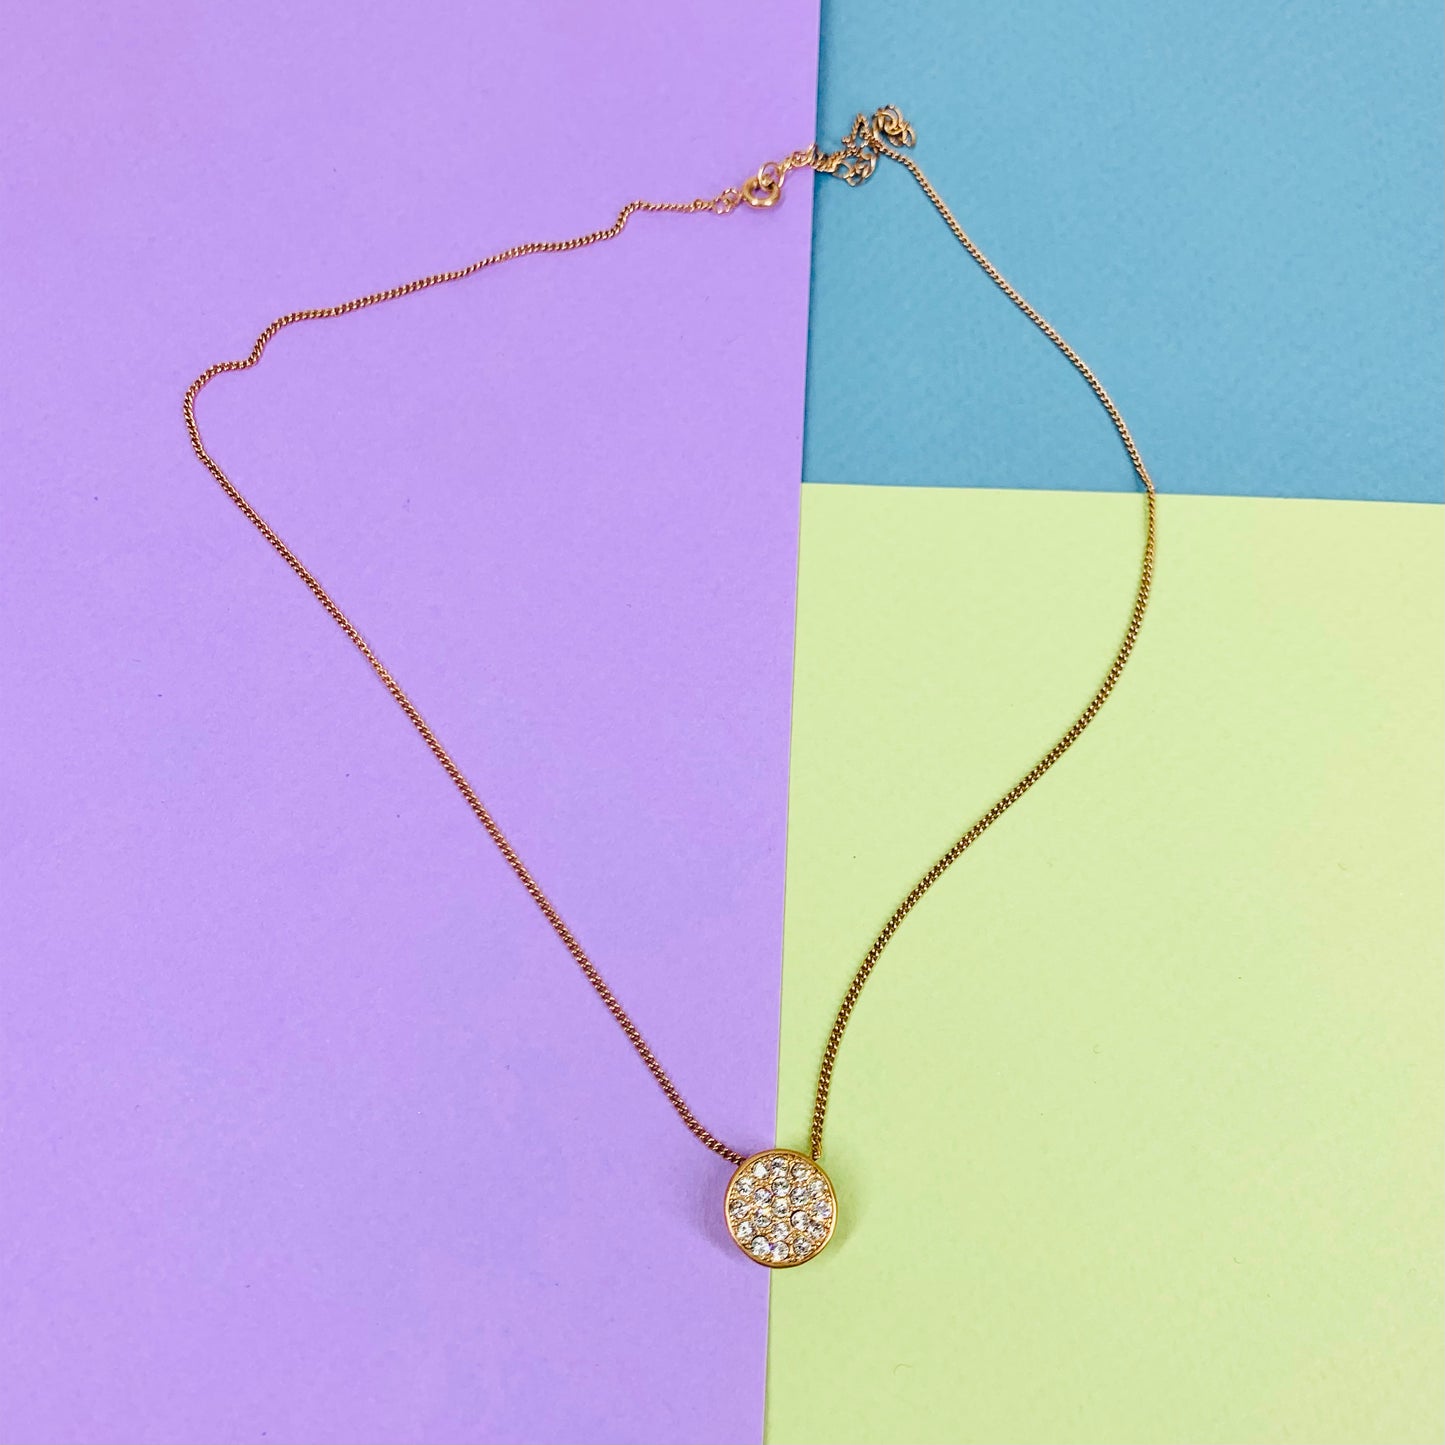 Vintage rose gold plated necklace with diamanté ball pendant by APM Monaco